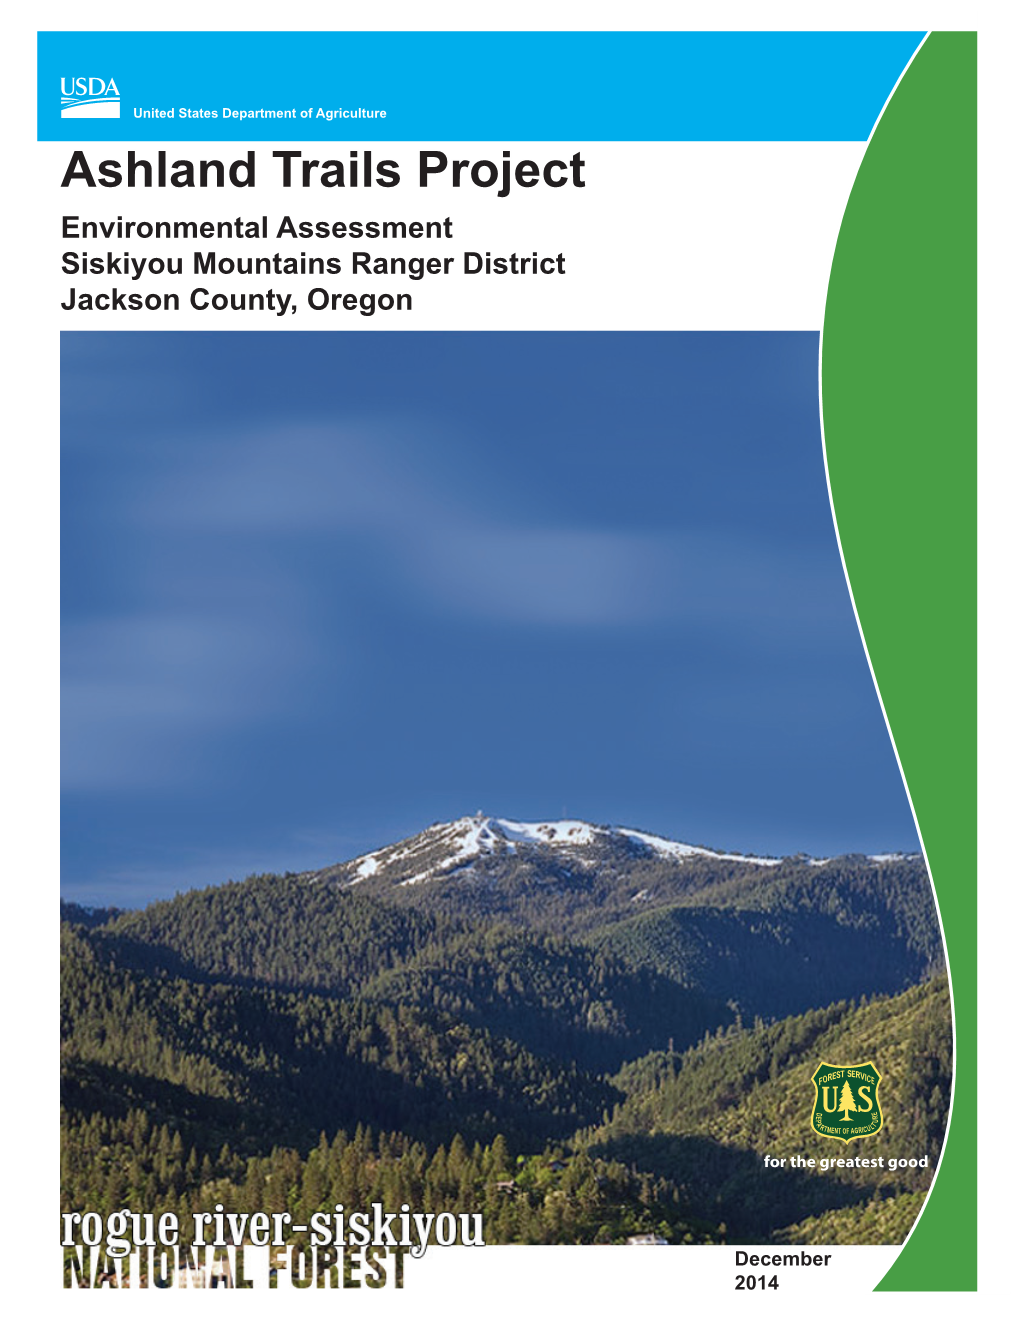 Ashland Trails Project Environmental Assessment Siskiyou Mountains Ranger District Jackson County, Oregon